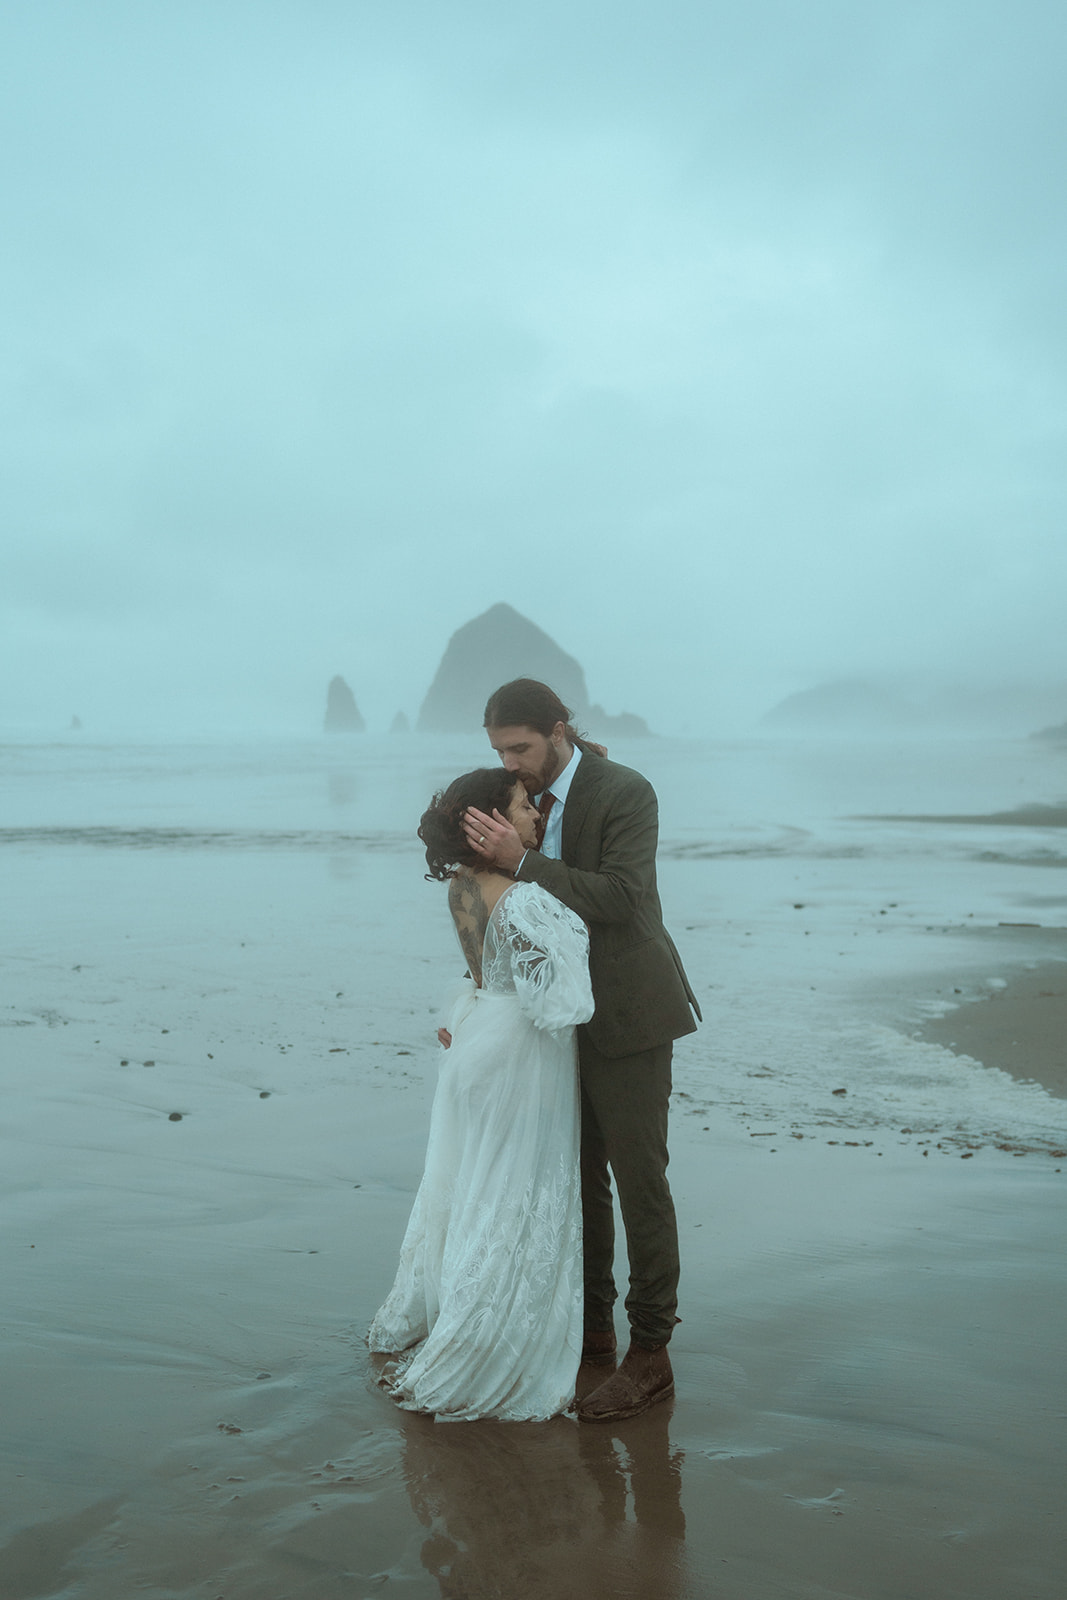 Cannon Beach elopement at Haystack Rock on Oregon's foggy, moody coast near Astoria, Oregon